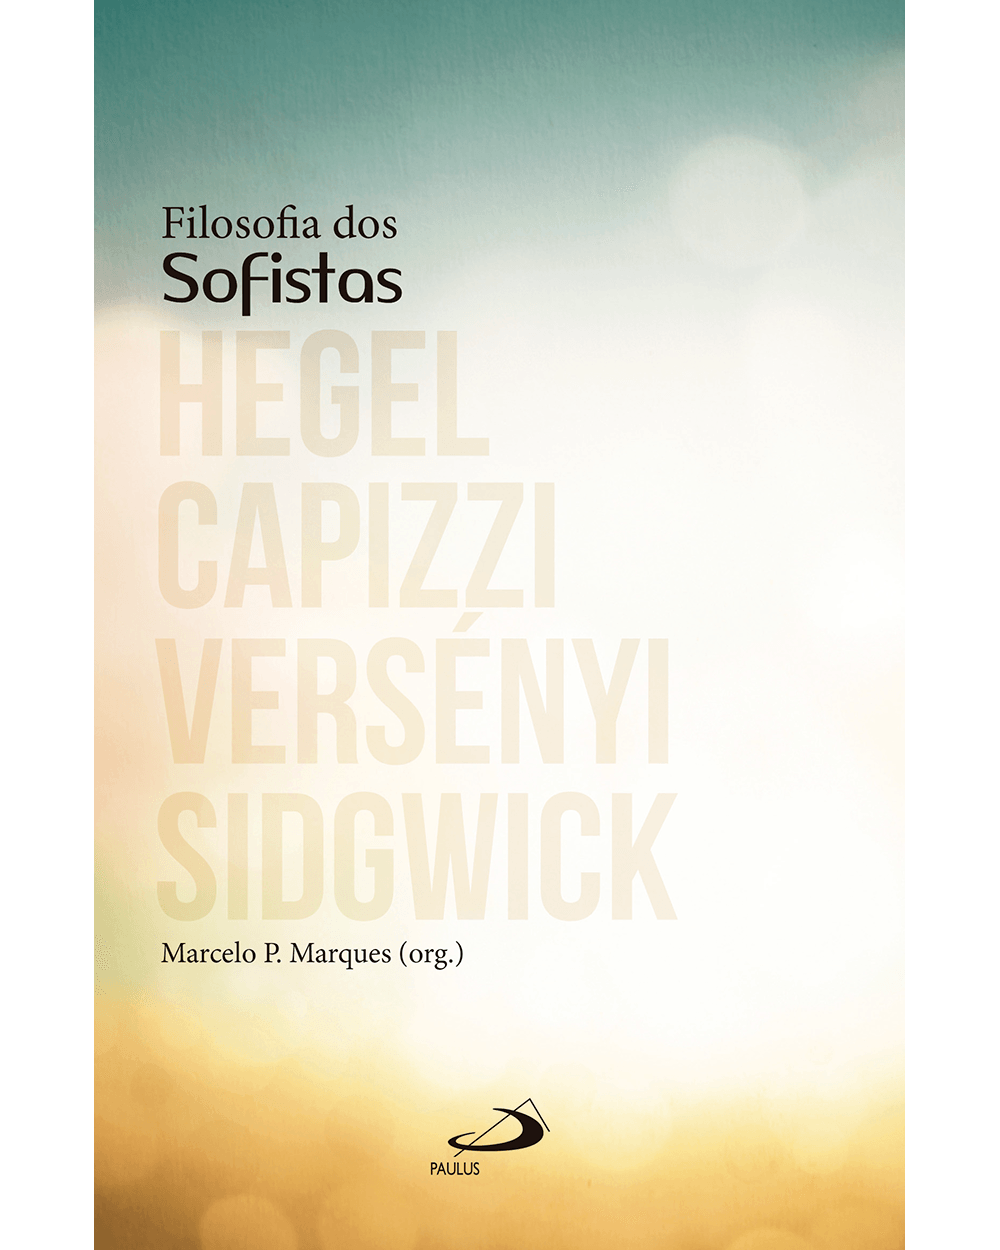 Filosofia dos Sofistas - Hegel, Capizzi, Versényi, Sidgwick